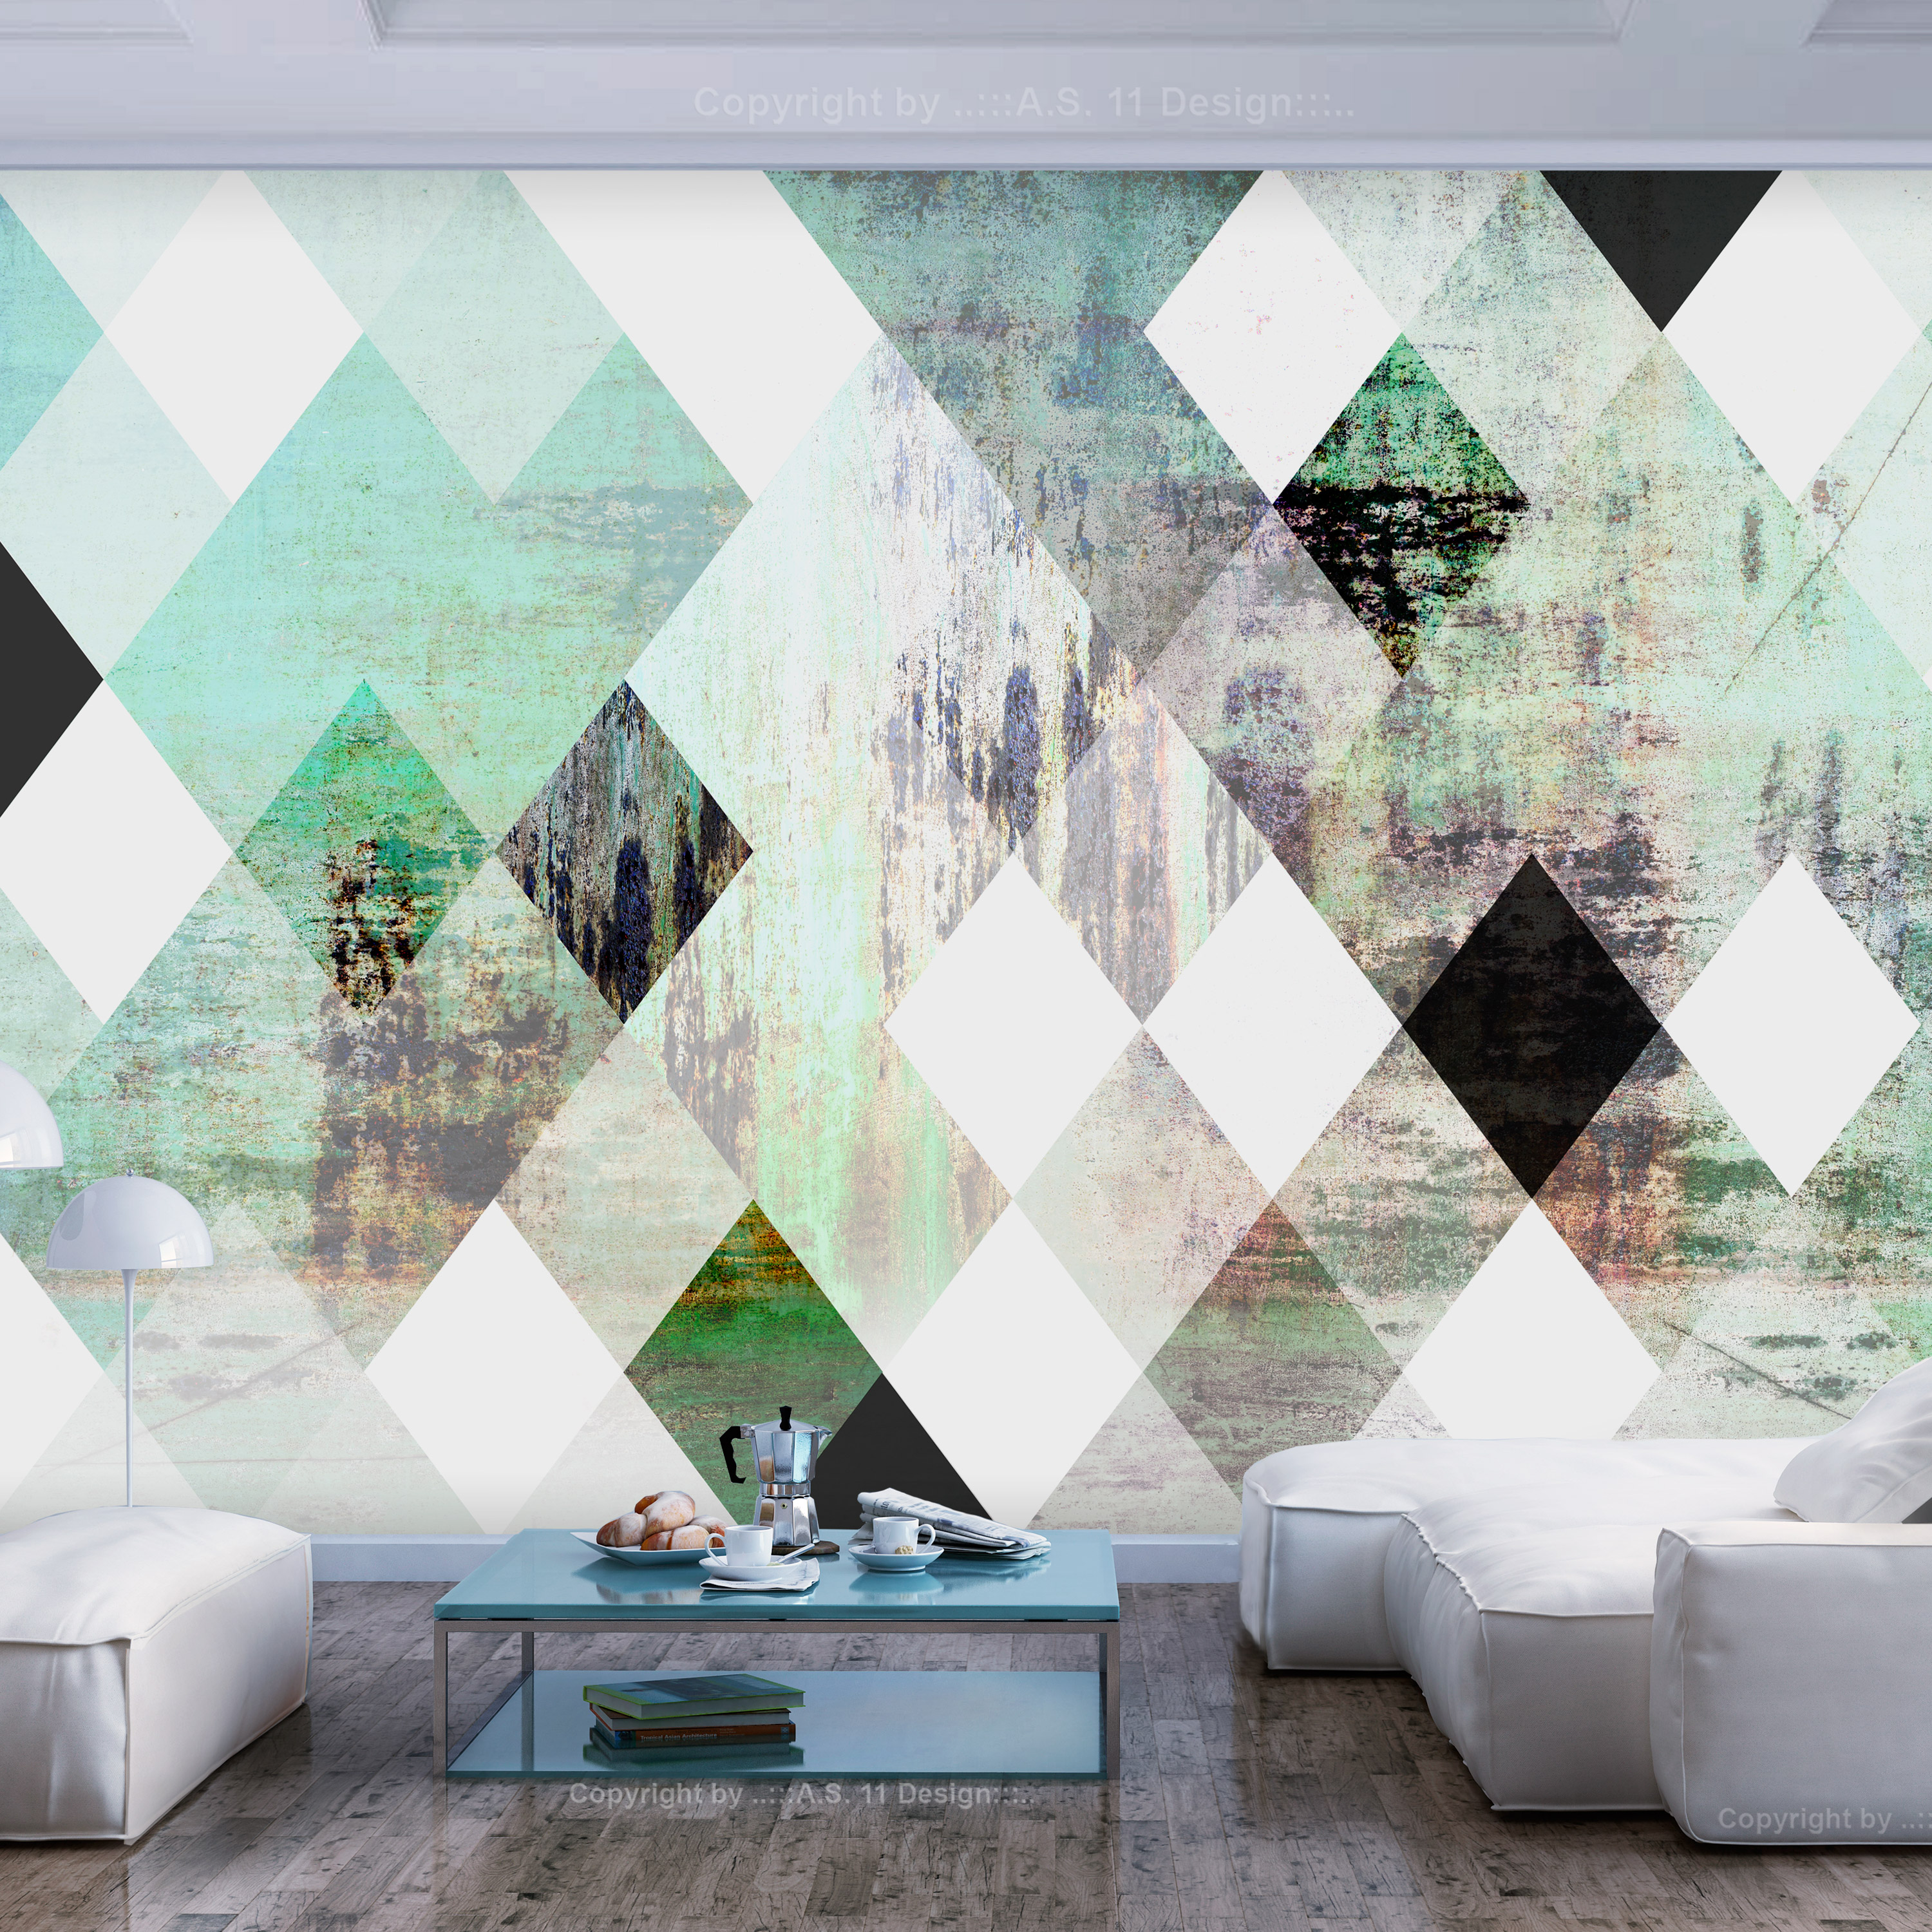 Self-adhesive Wallpaper - Rhombic Chessboard (Green) - 196x140